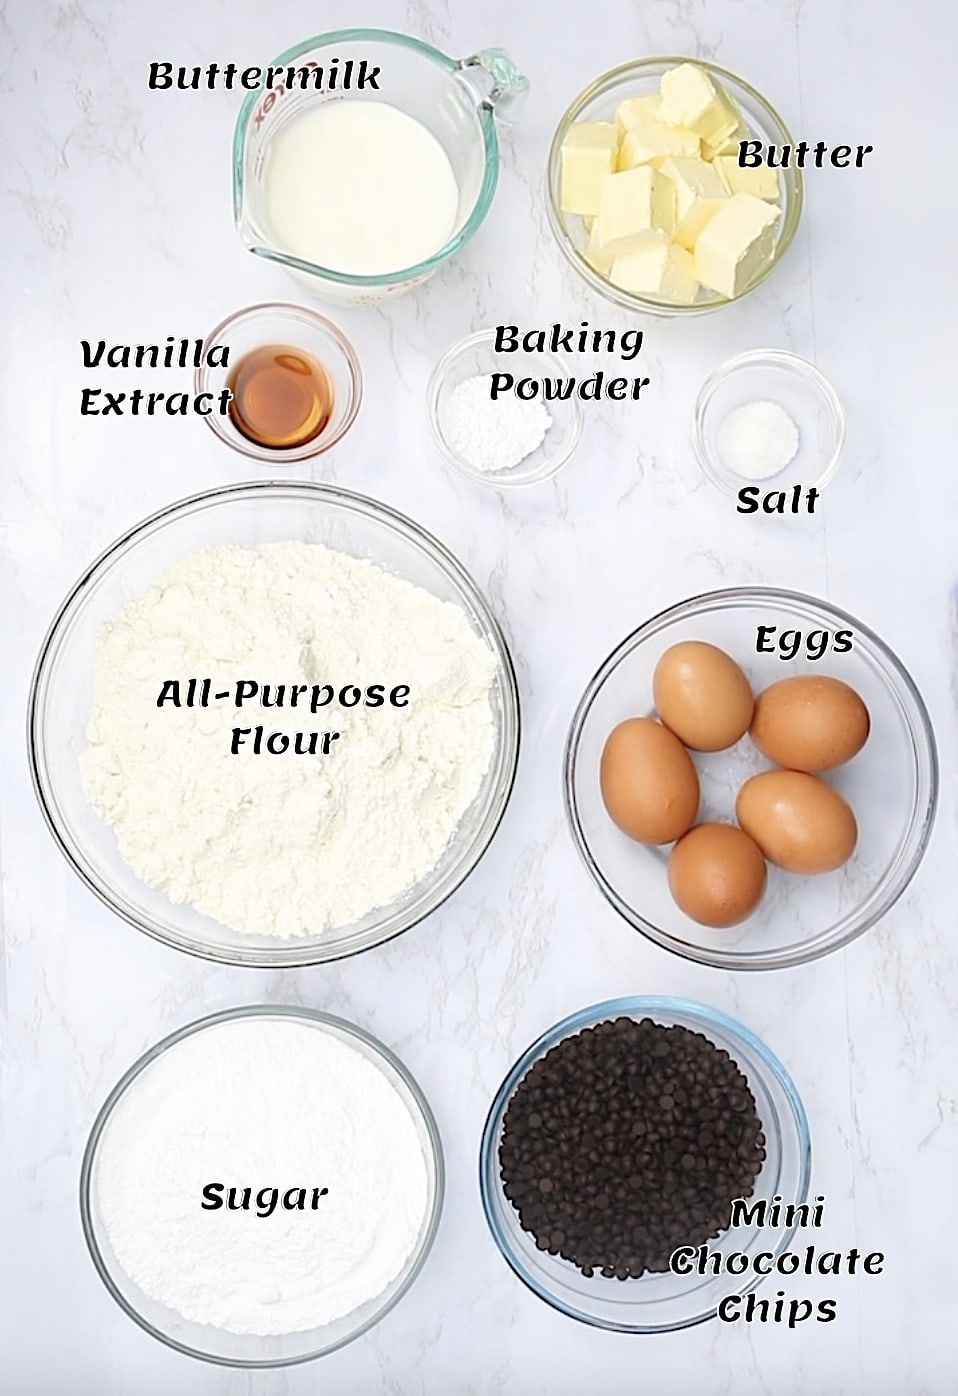 Recipe ingredients